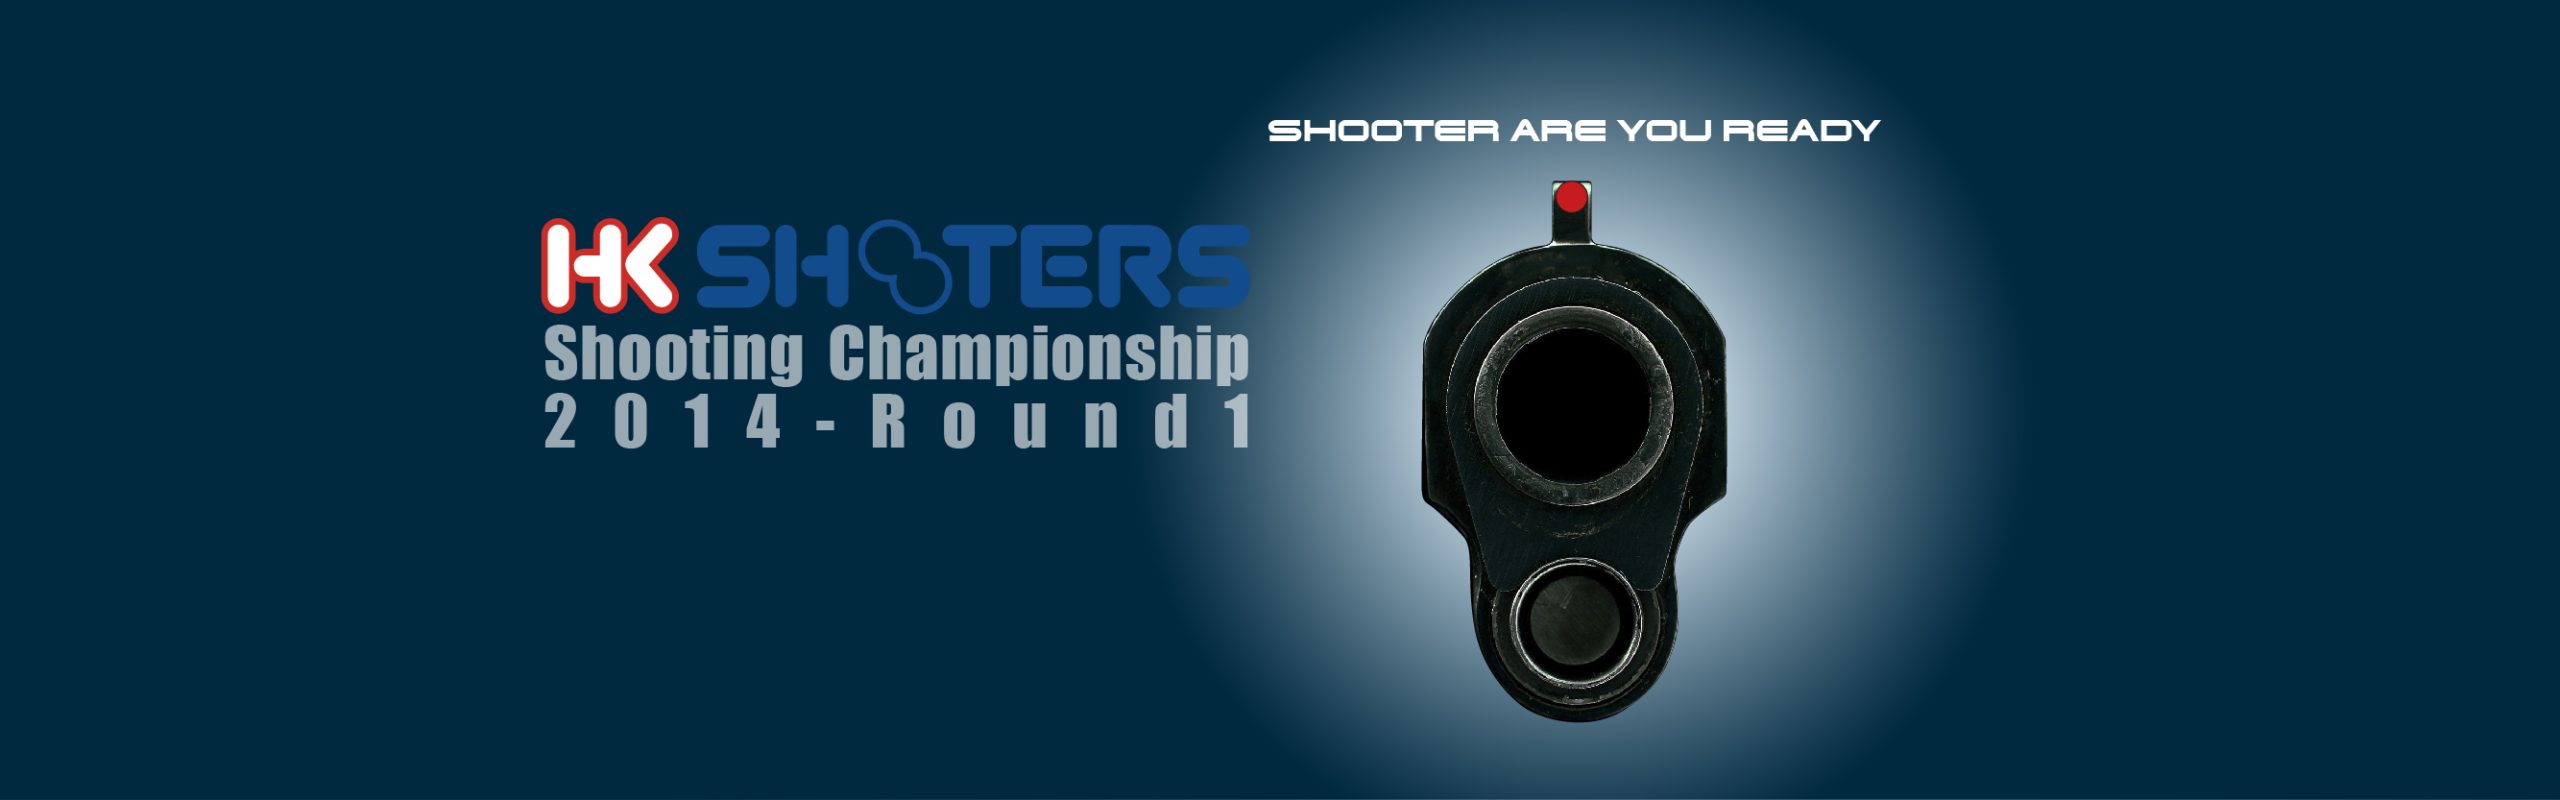 HKSHOOTERS Shooting Championship 2014